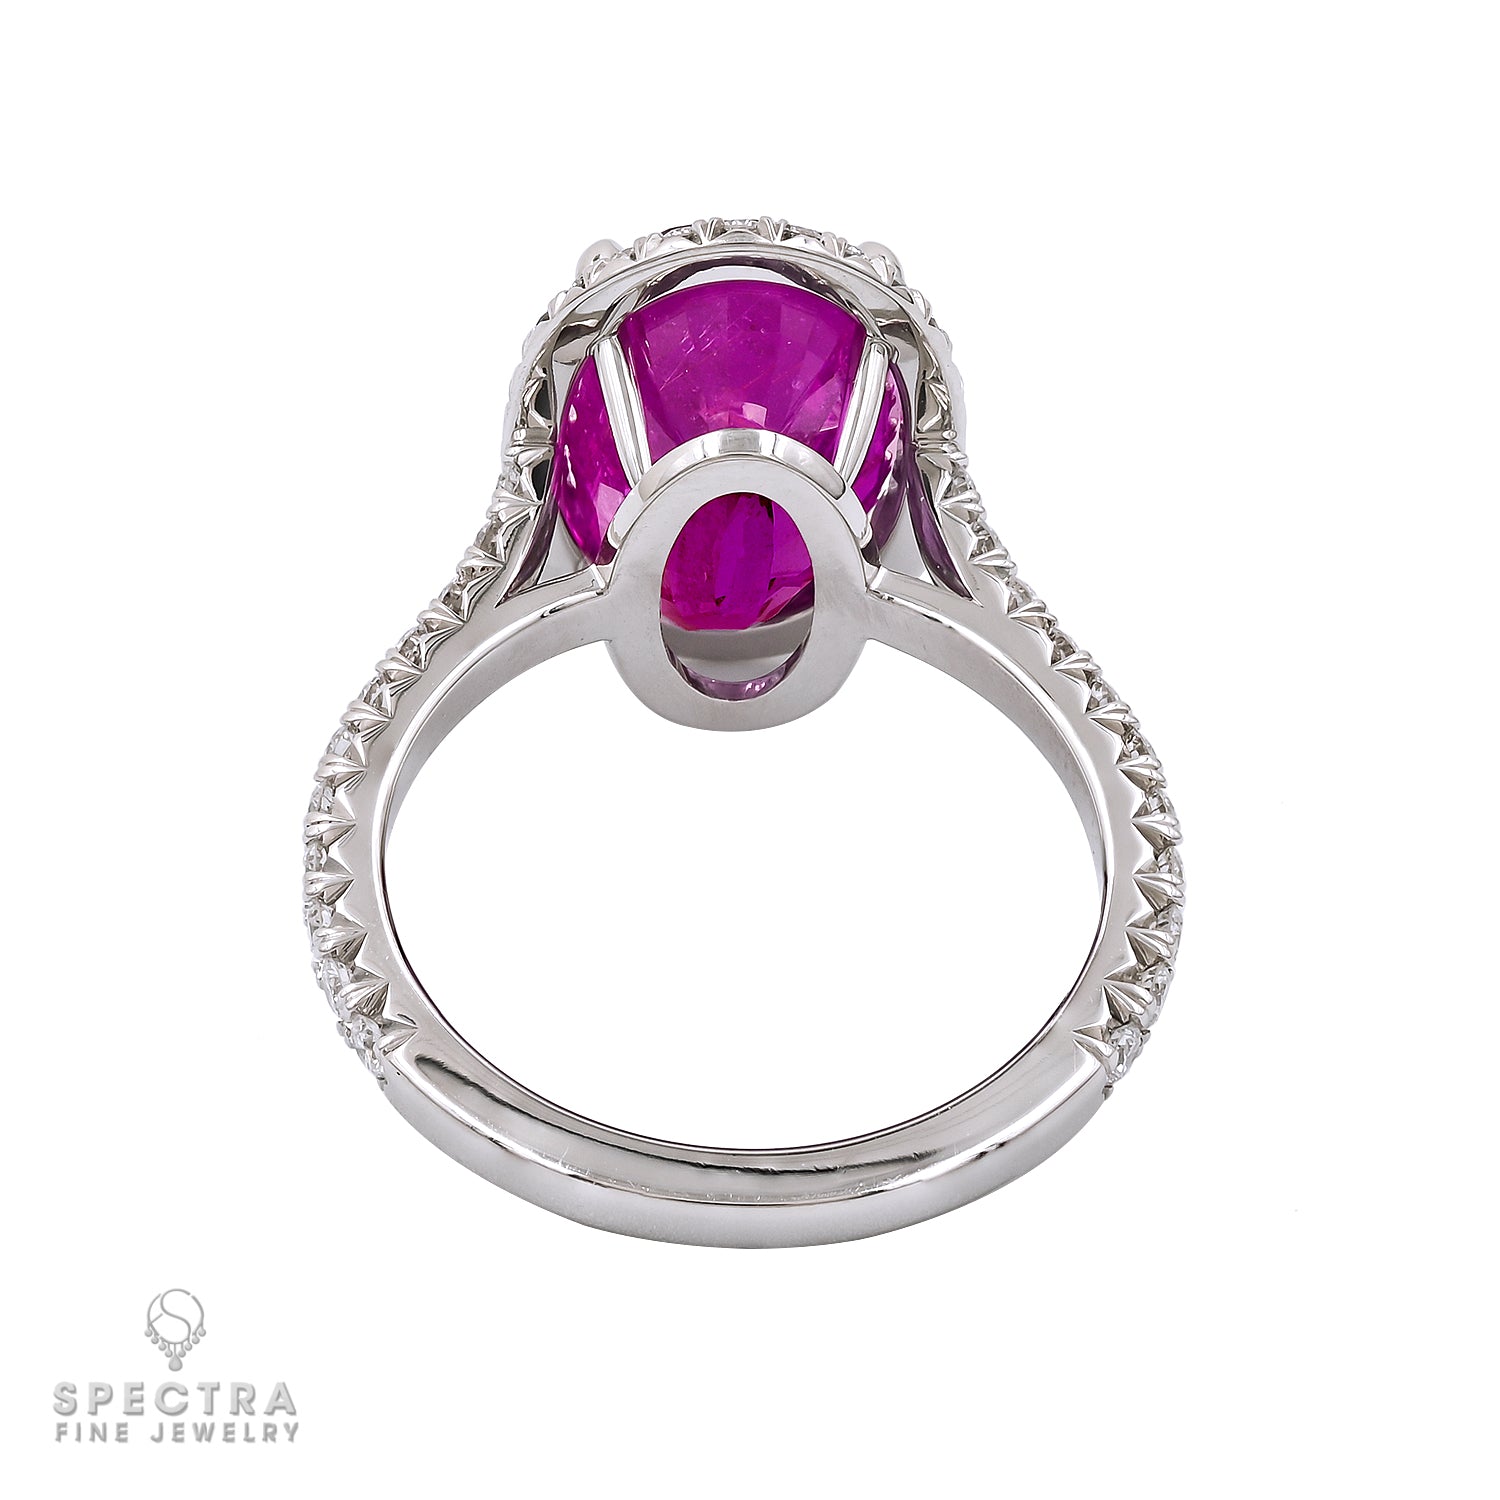 Spectra Fine Jewelry Madagascar Pink Sapphire Diamond Halo Cocktail Ring